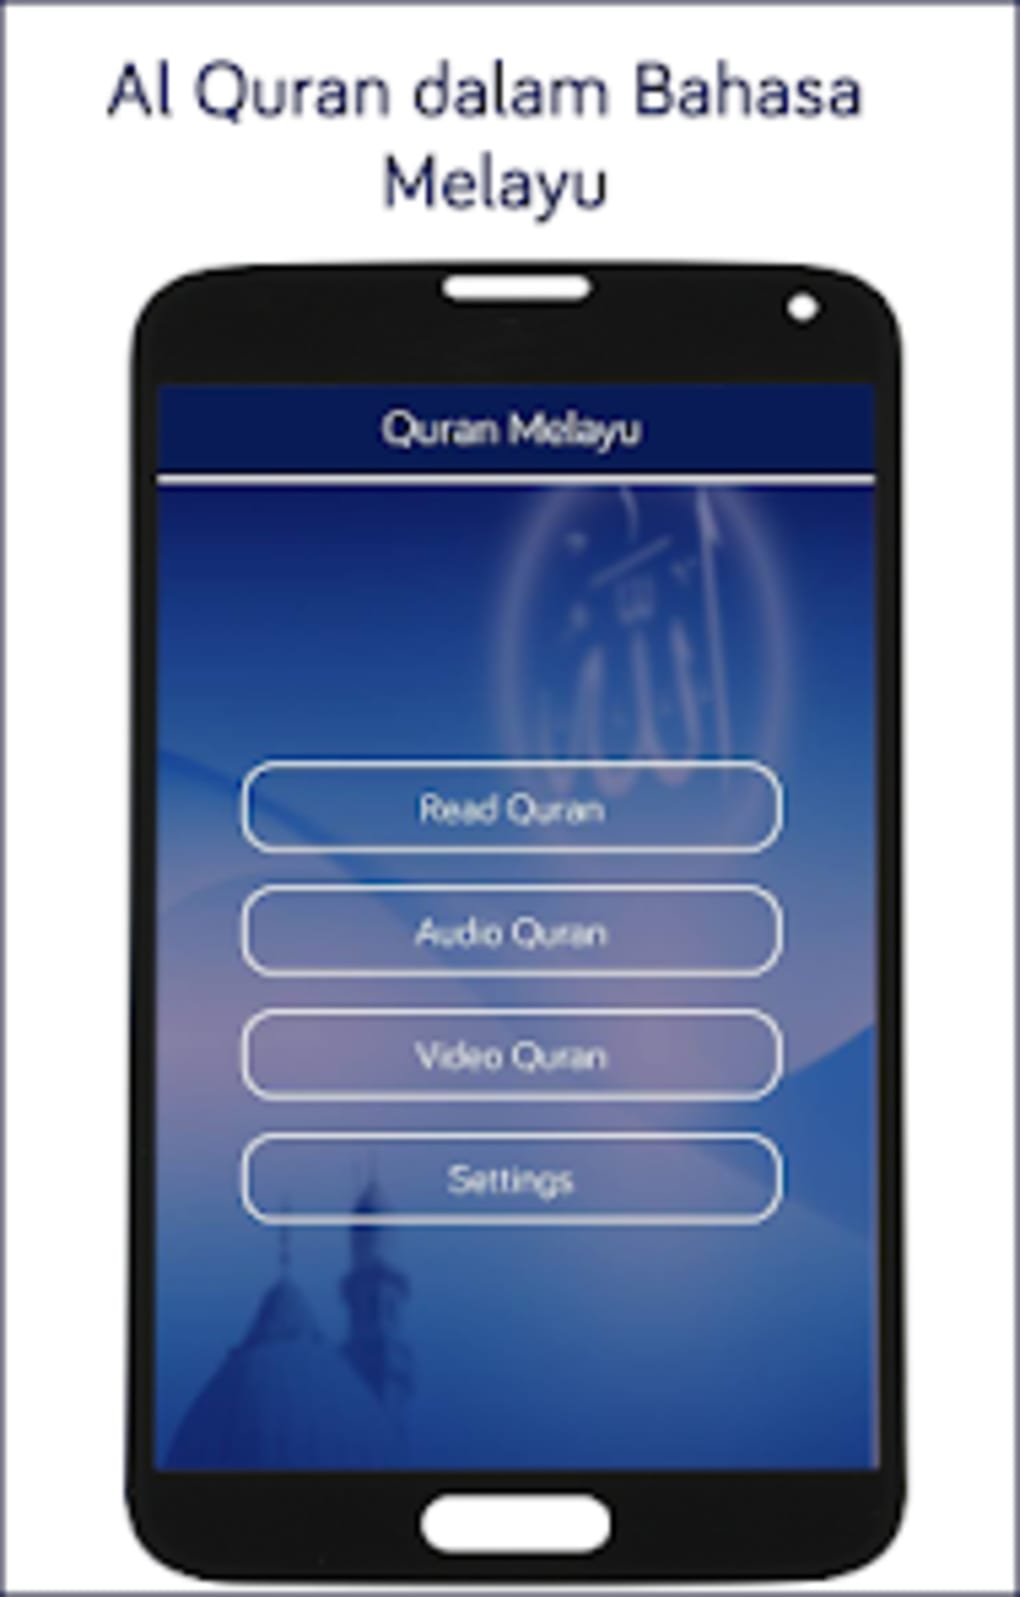 Al Quran Bahasa Melayu MP3 - T für Android - Download